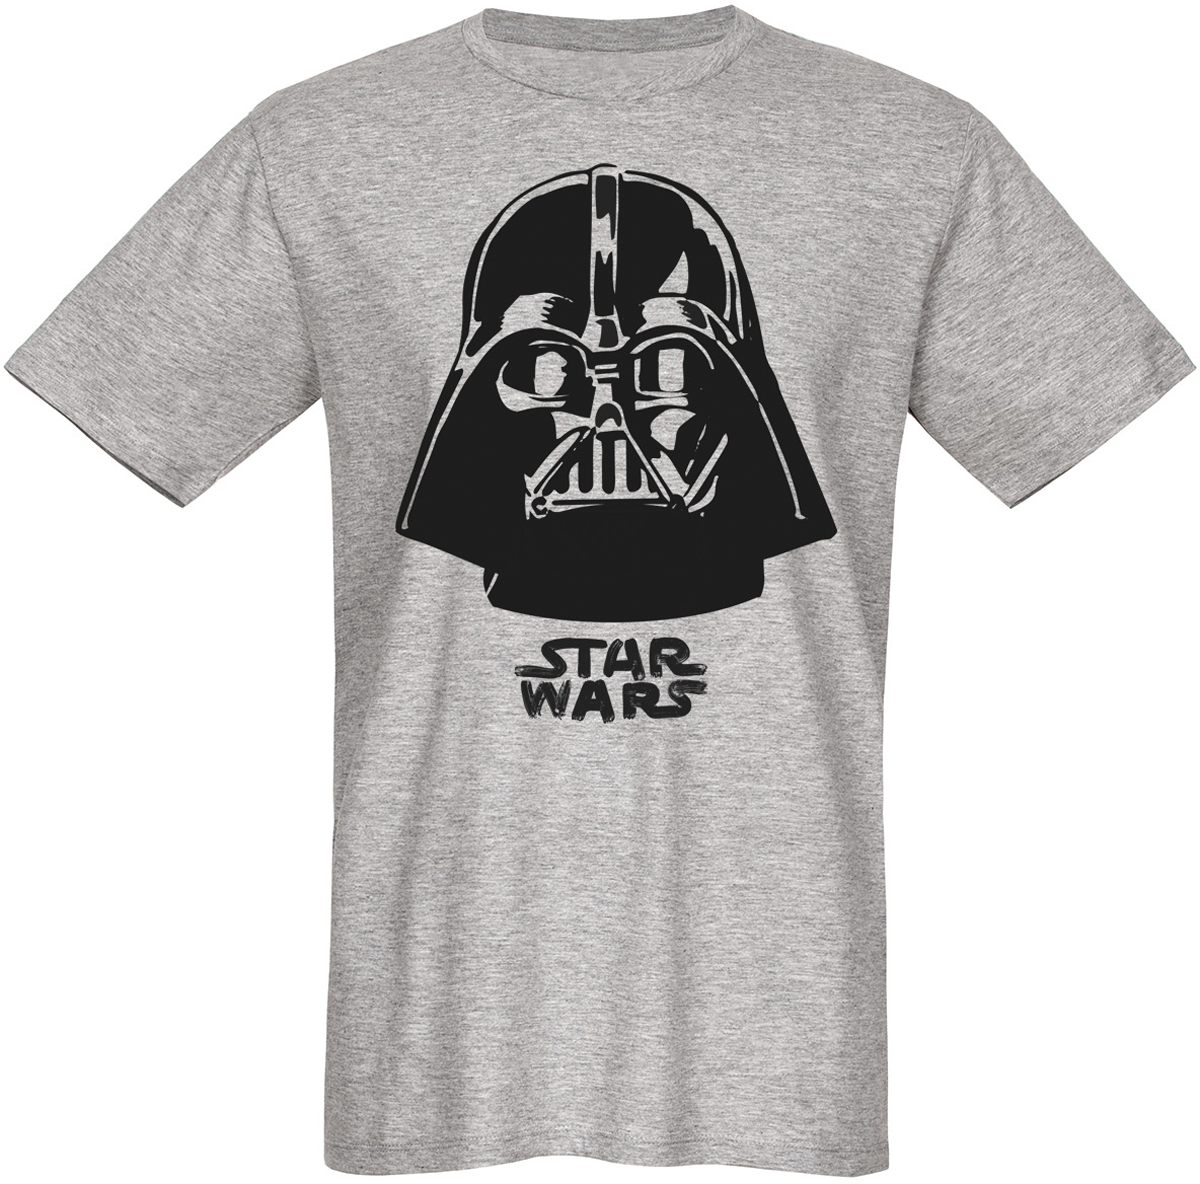 Star Wars - Darth Vader - The Boss - T-Shirt - grau